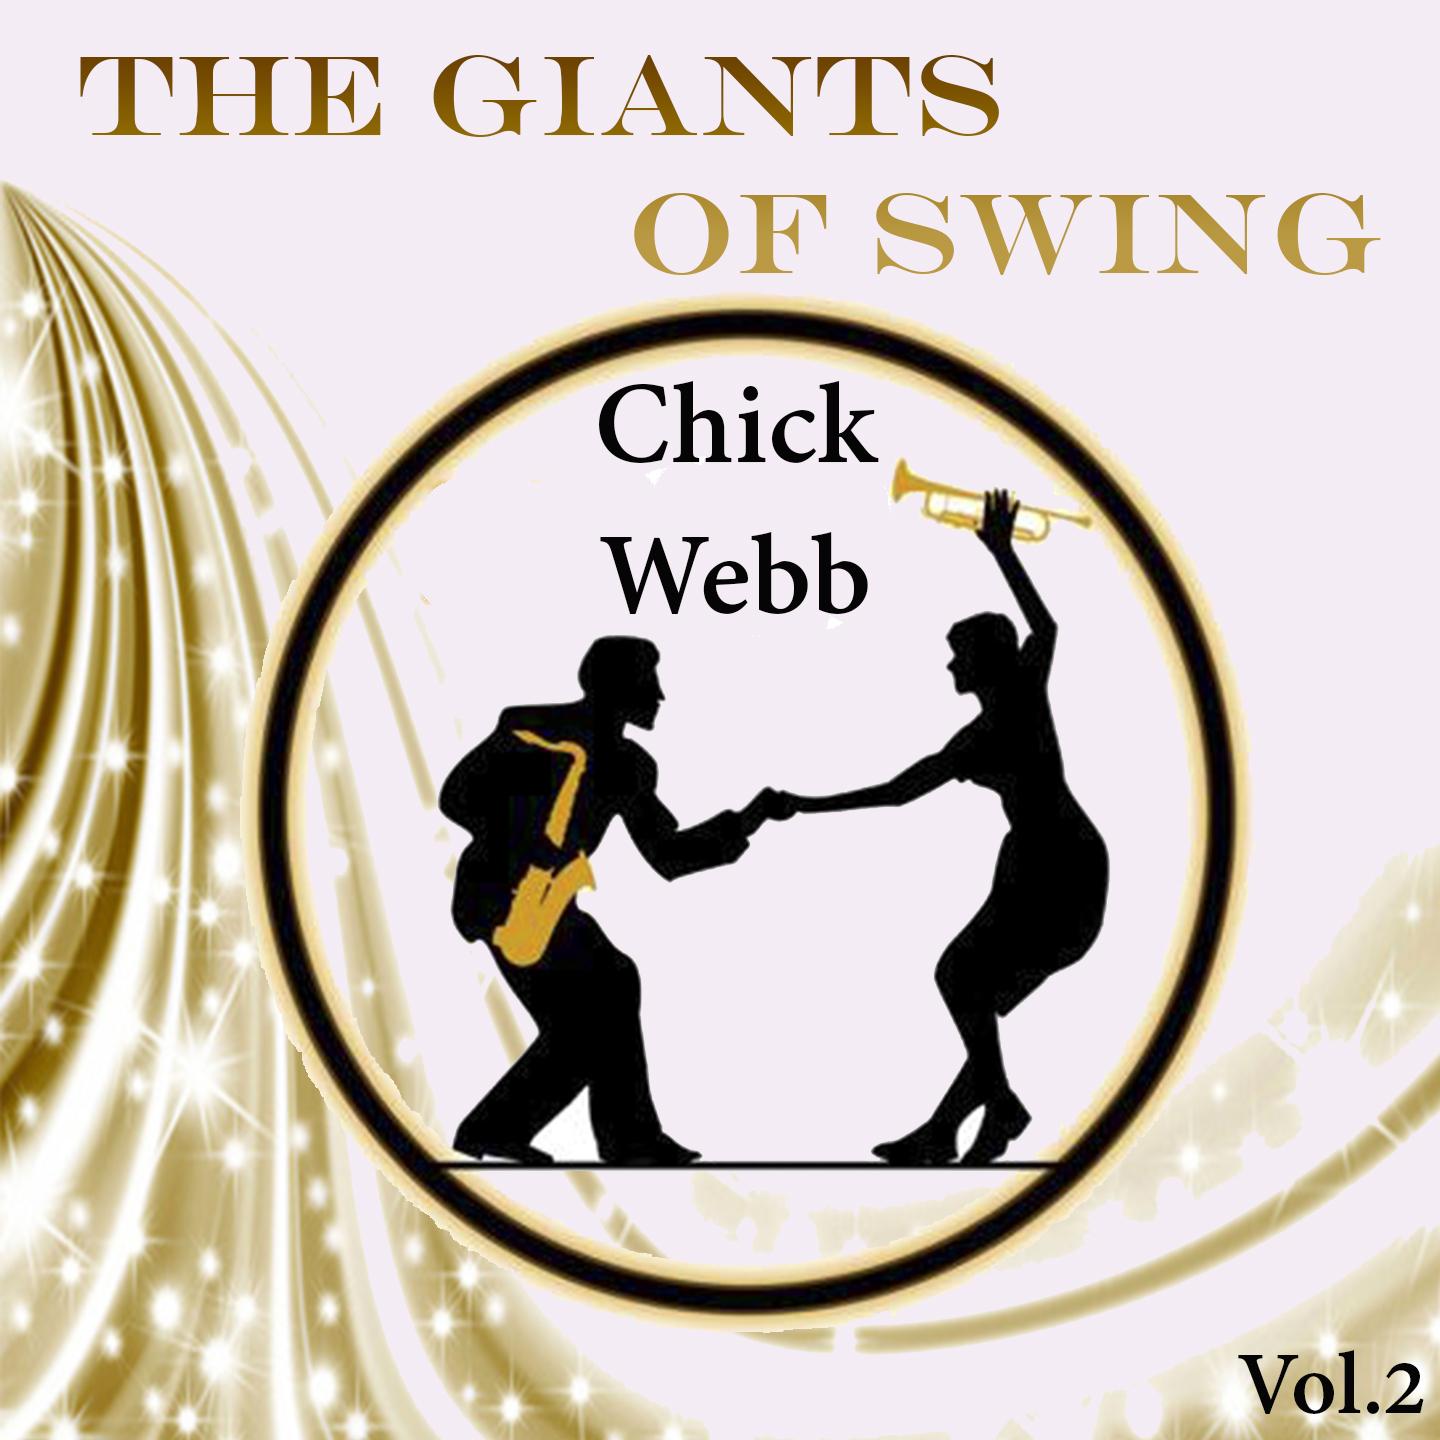 The Giants of Swing, Chick Webb Vol. 2